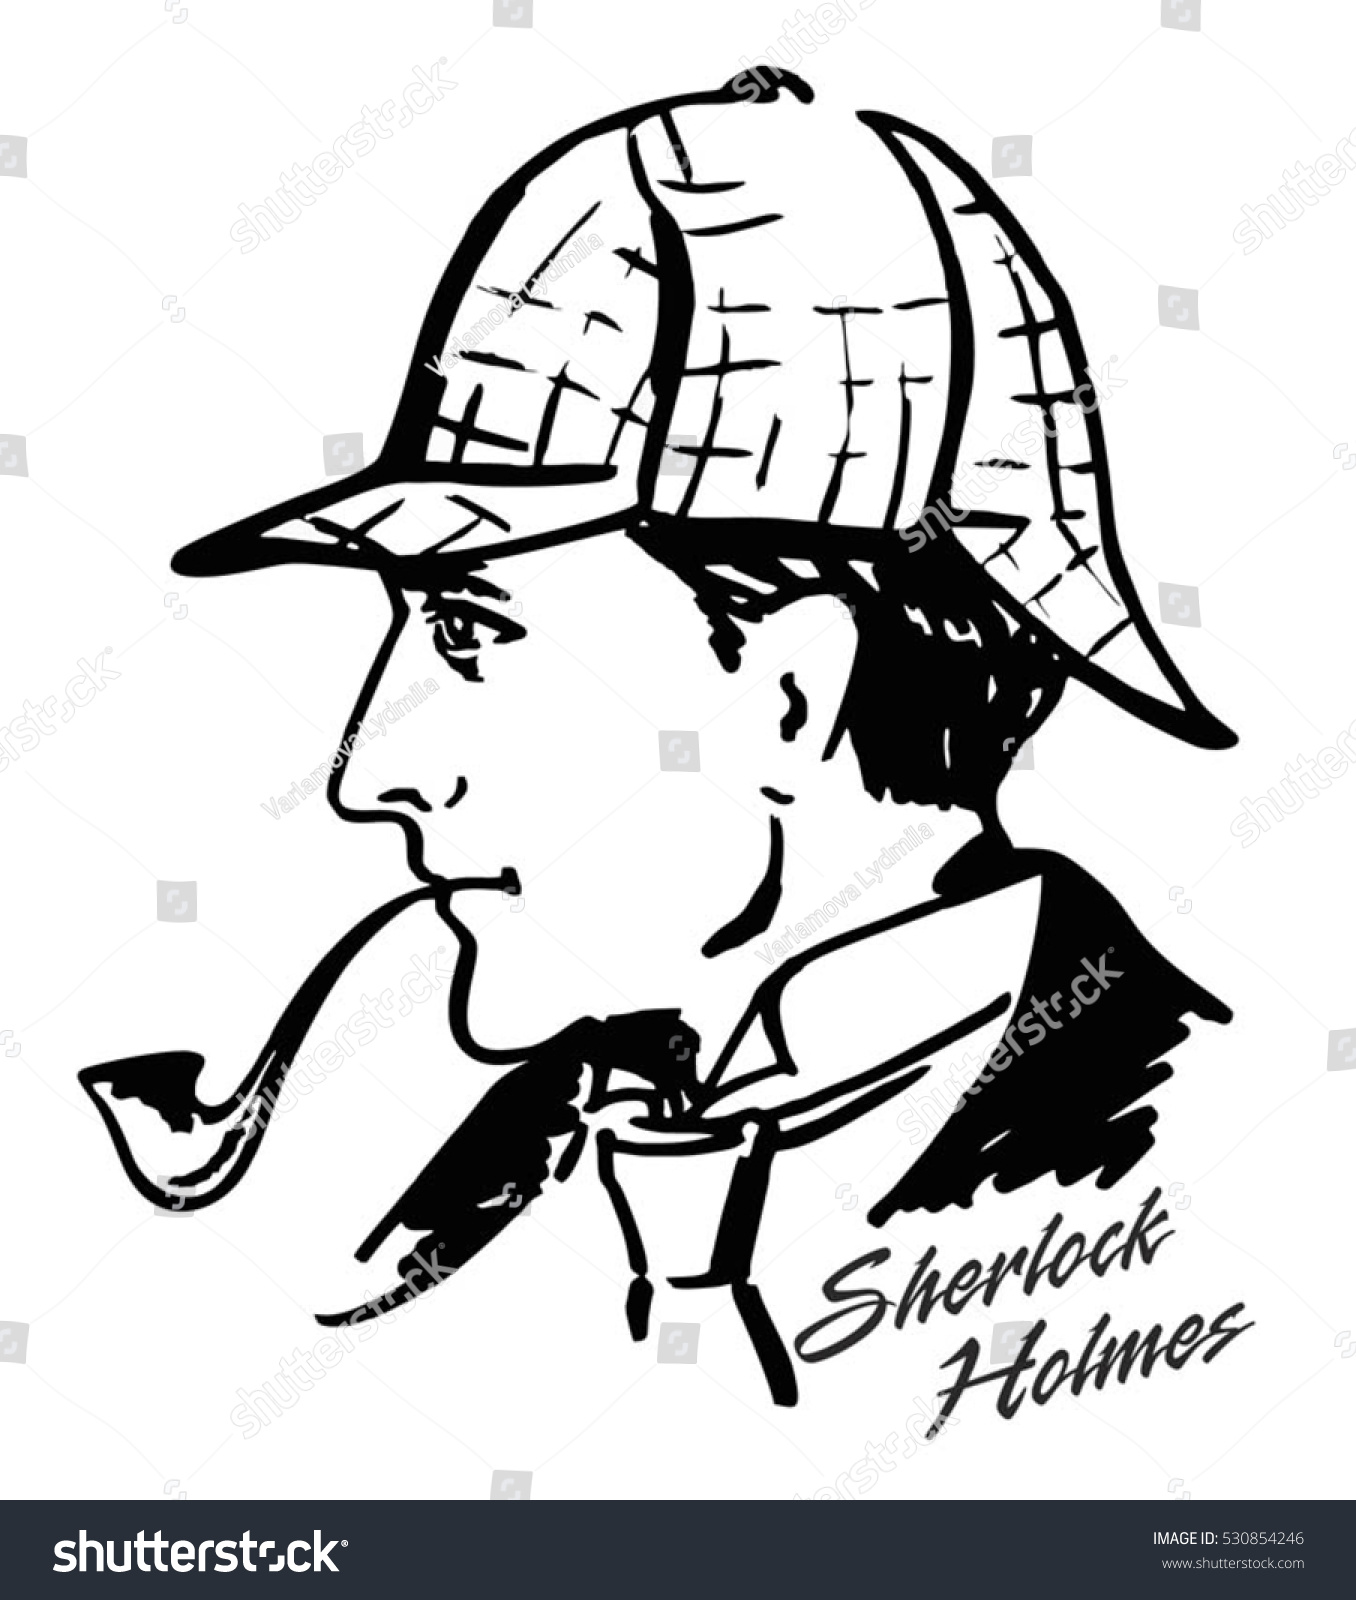 818 Sherlock holmes drawing Images, Stock Photos & Vectors Shutterstock